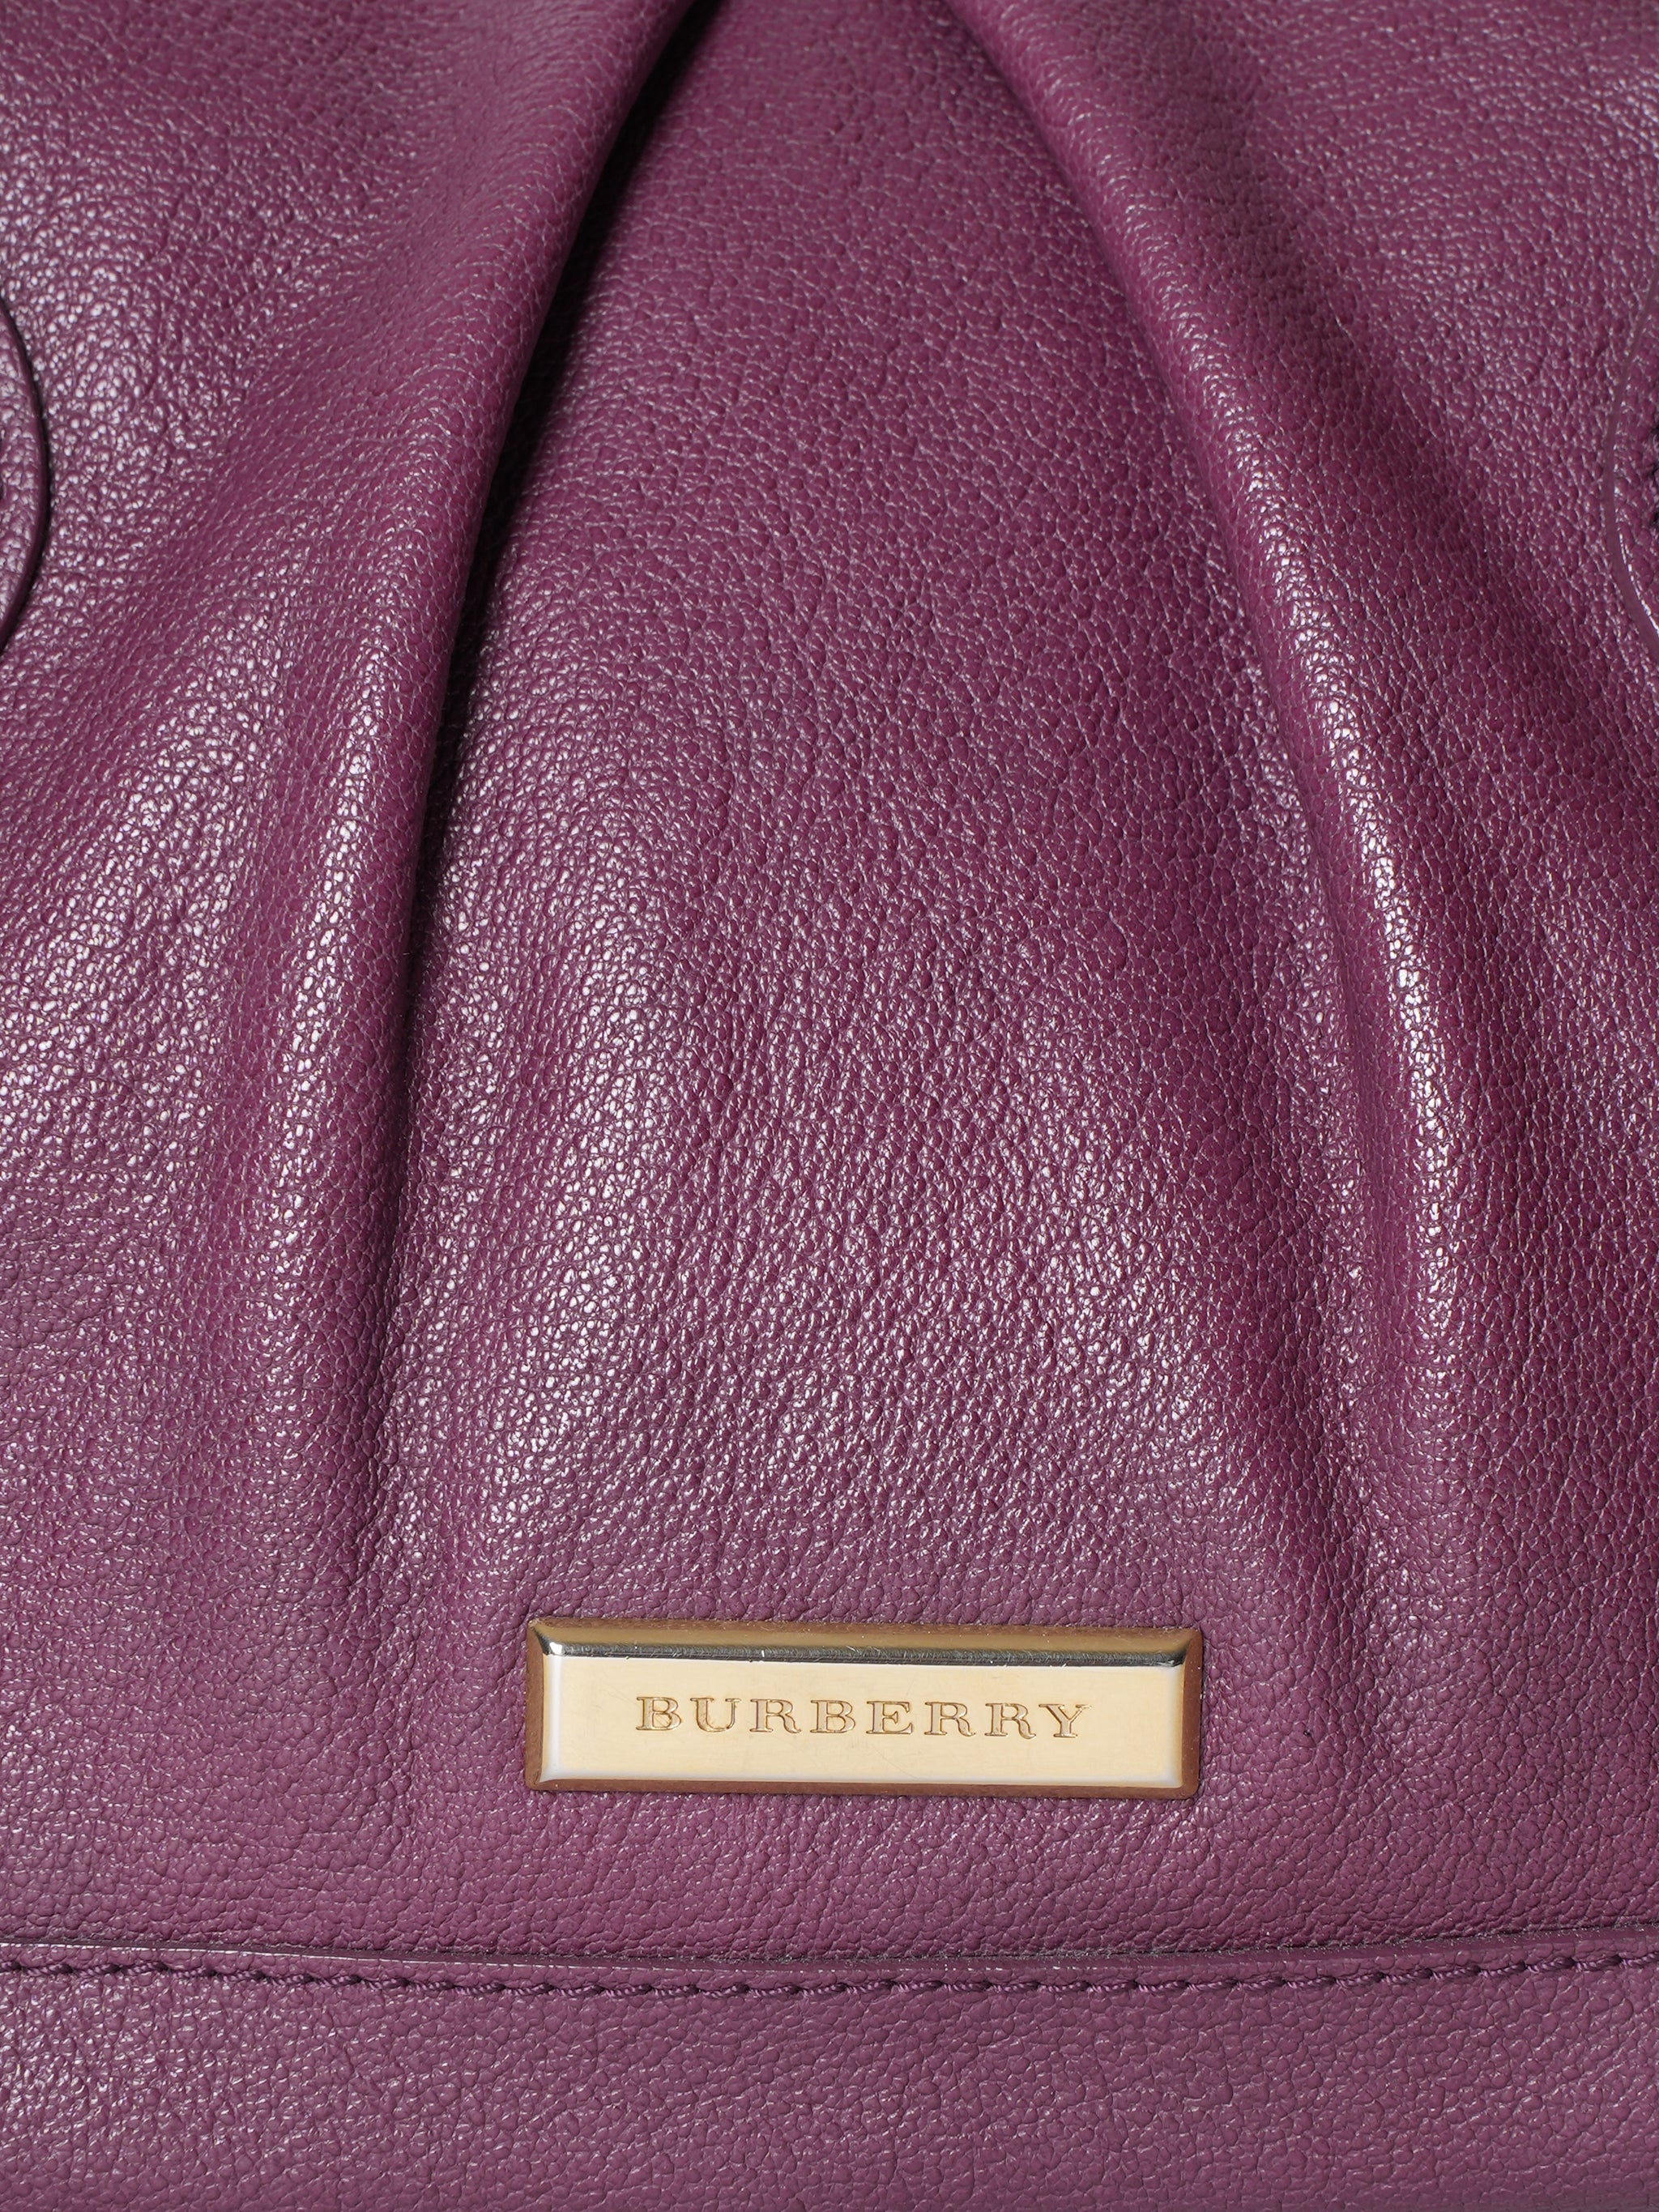 Burberry Barrel Leather Handbag